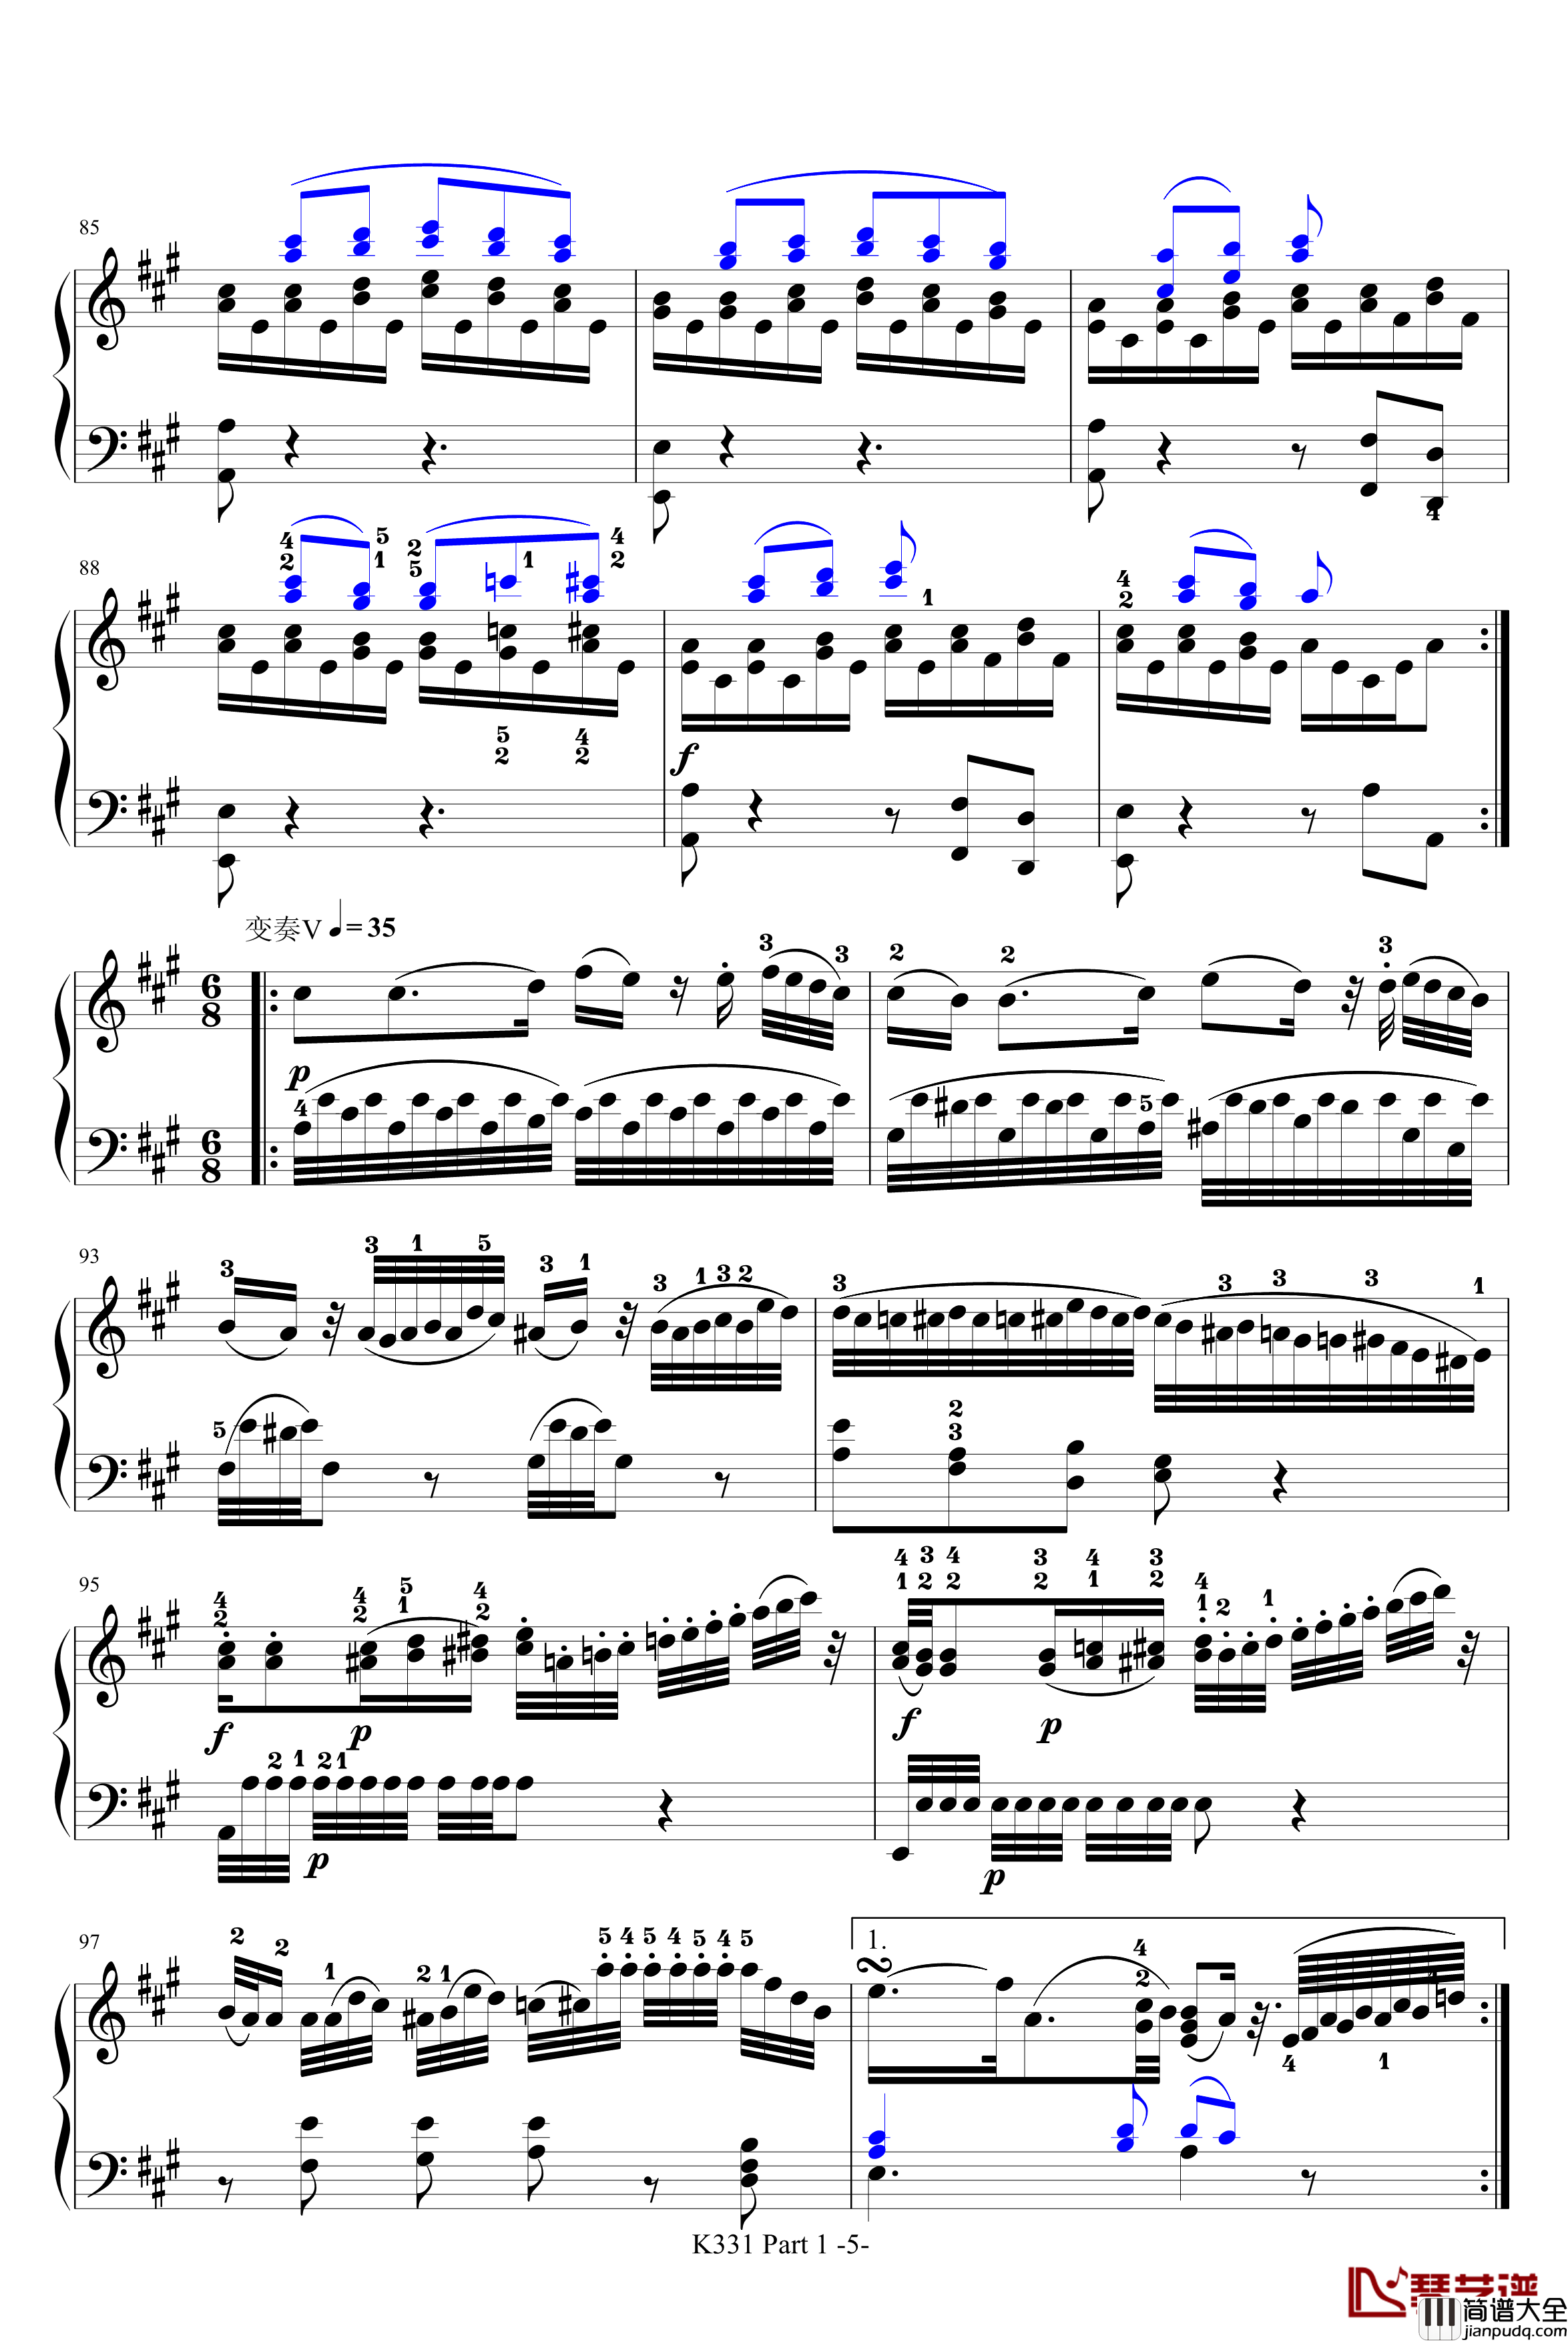 K331第一乐章钢琴谱_带指法_莫扎特